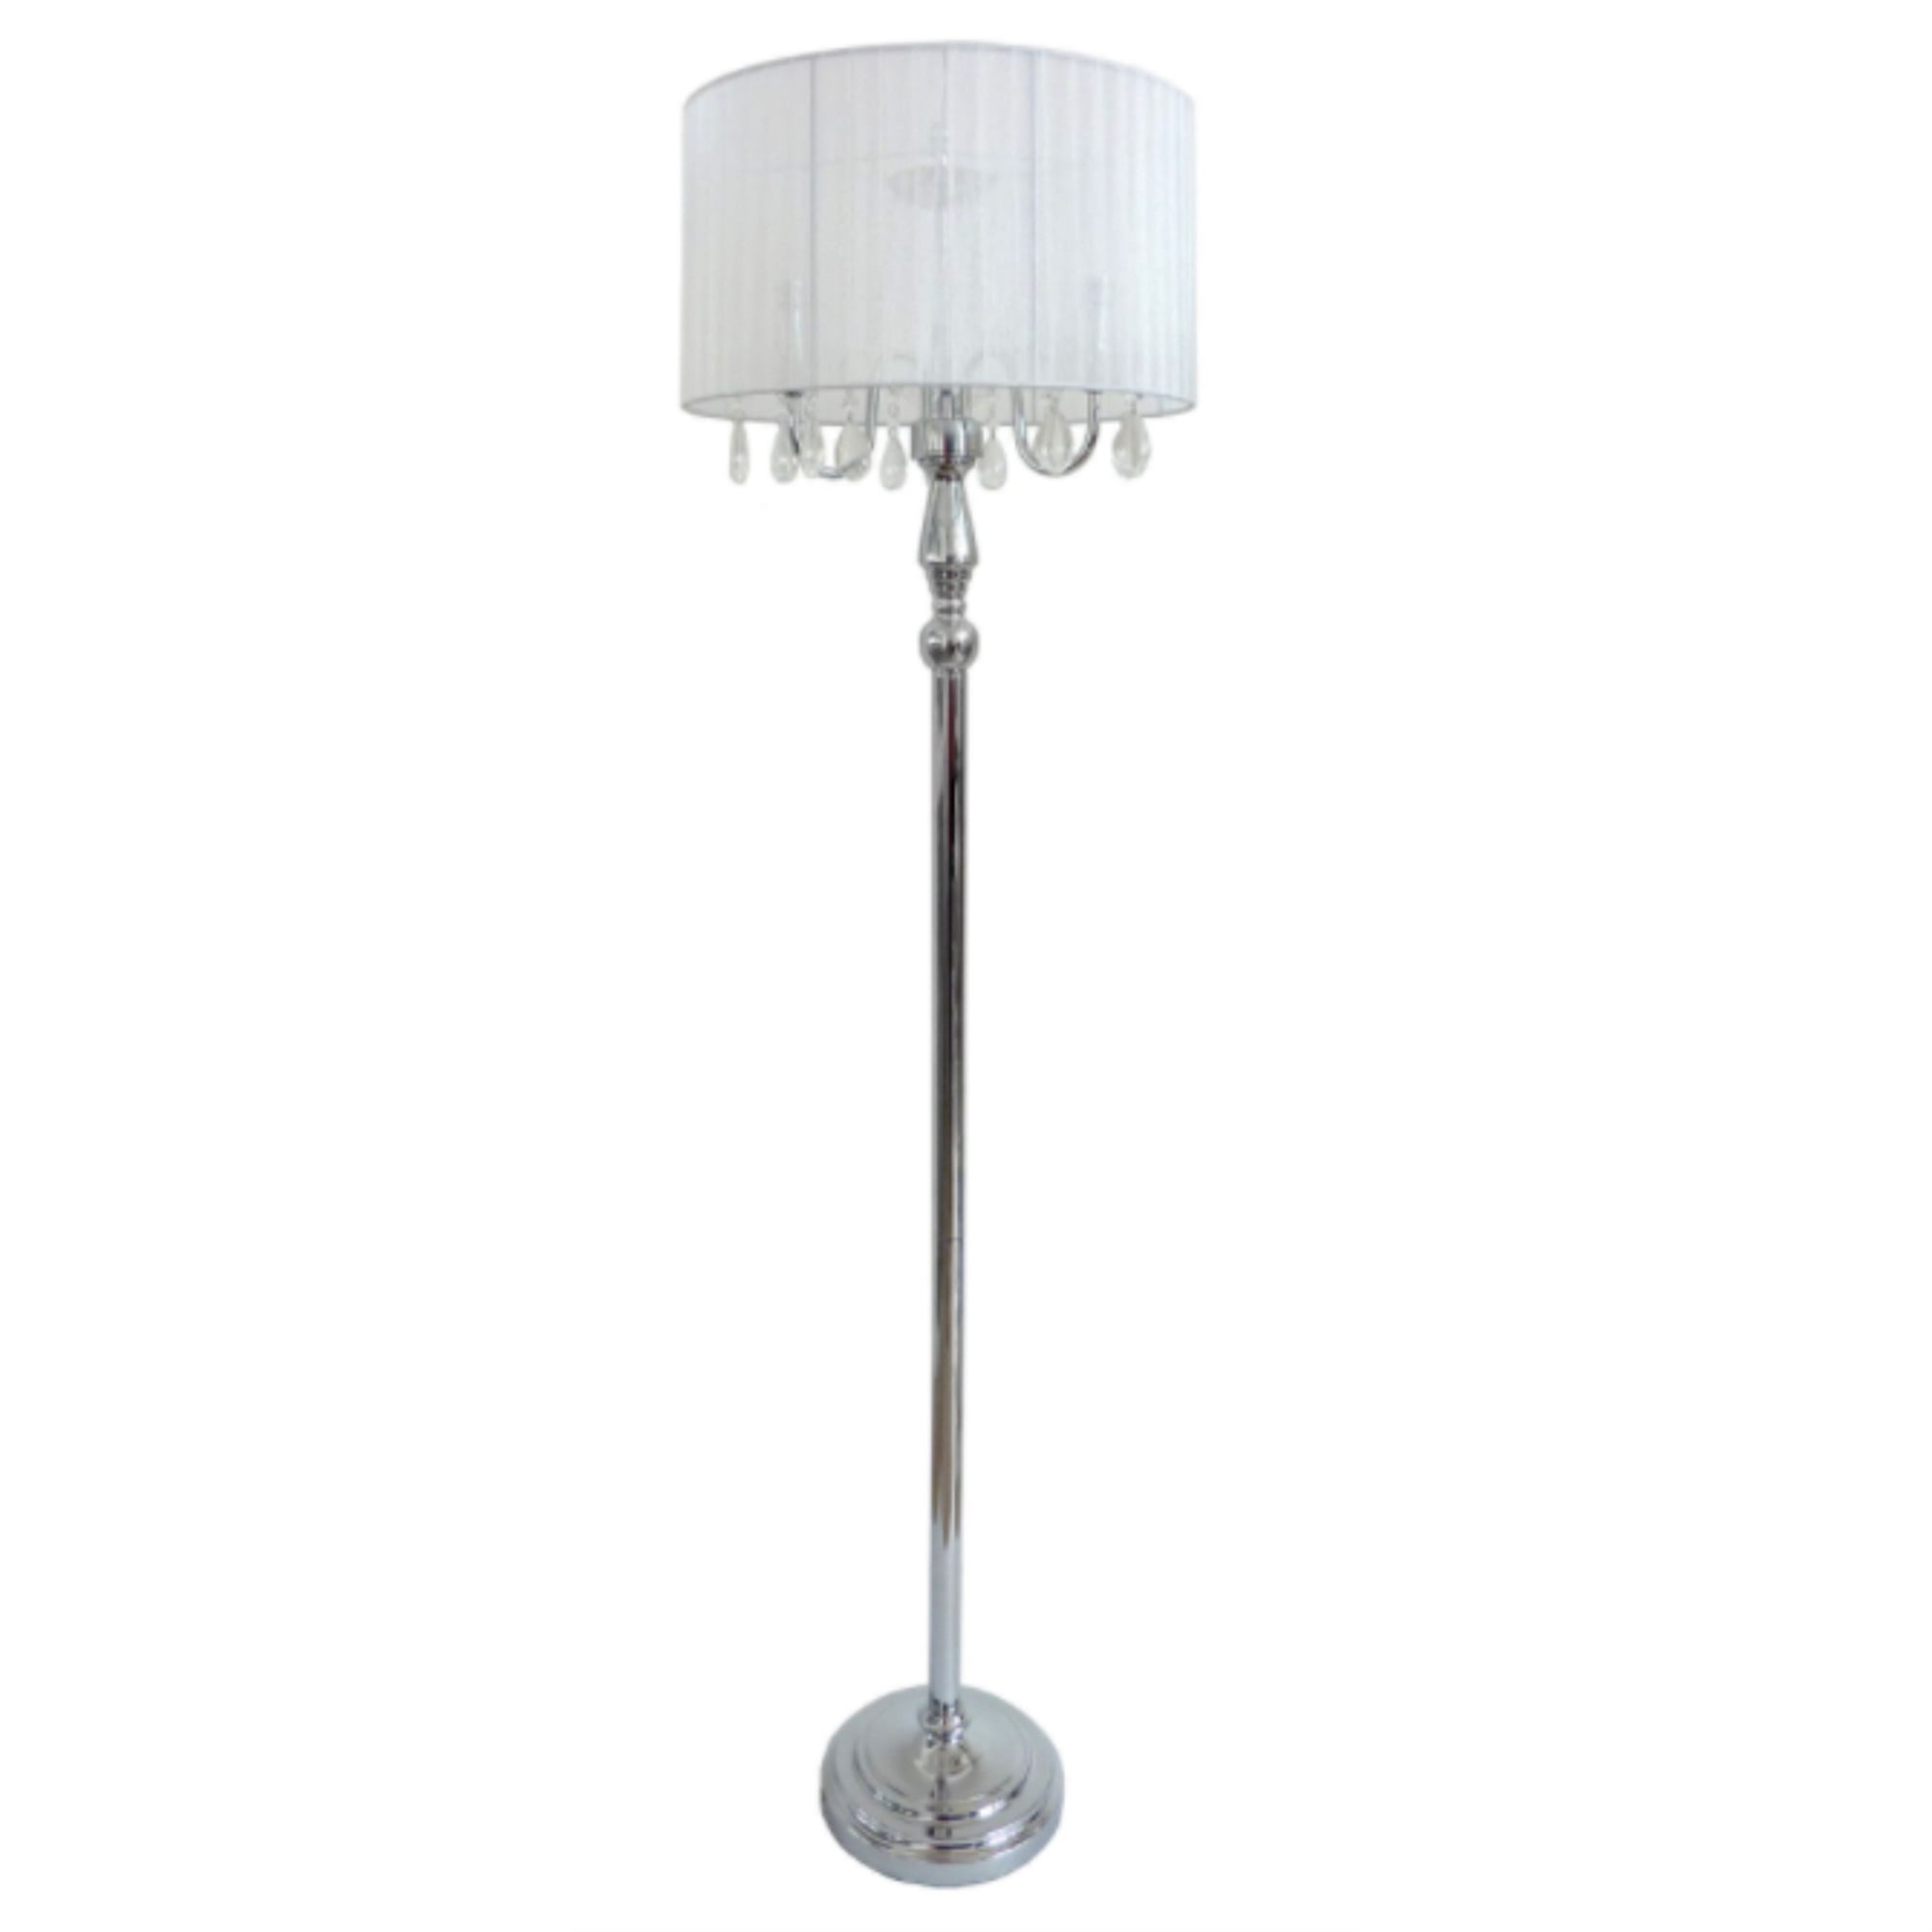 Black Floor Lamp, Elegant Designs LF1002-BLK Trendy Romantic Sheer Shade Hanging Crystals 